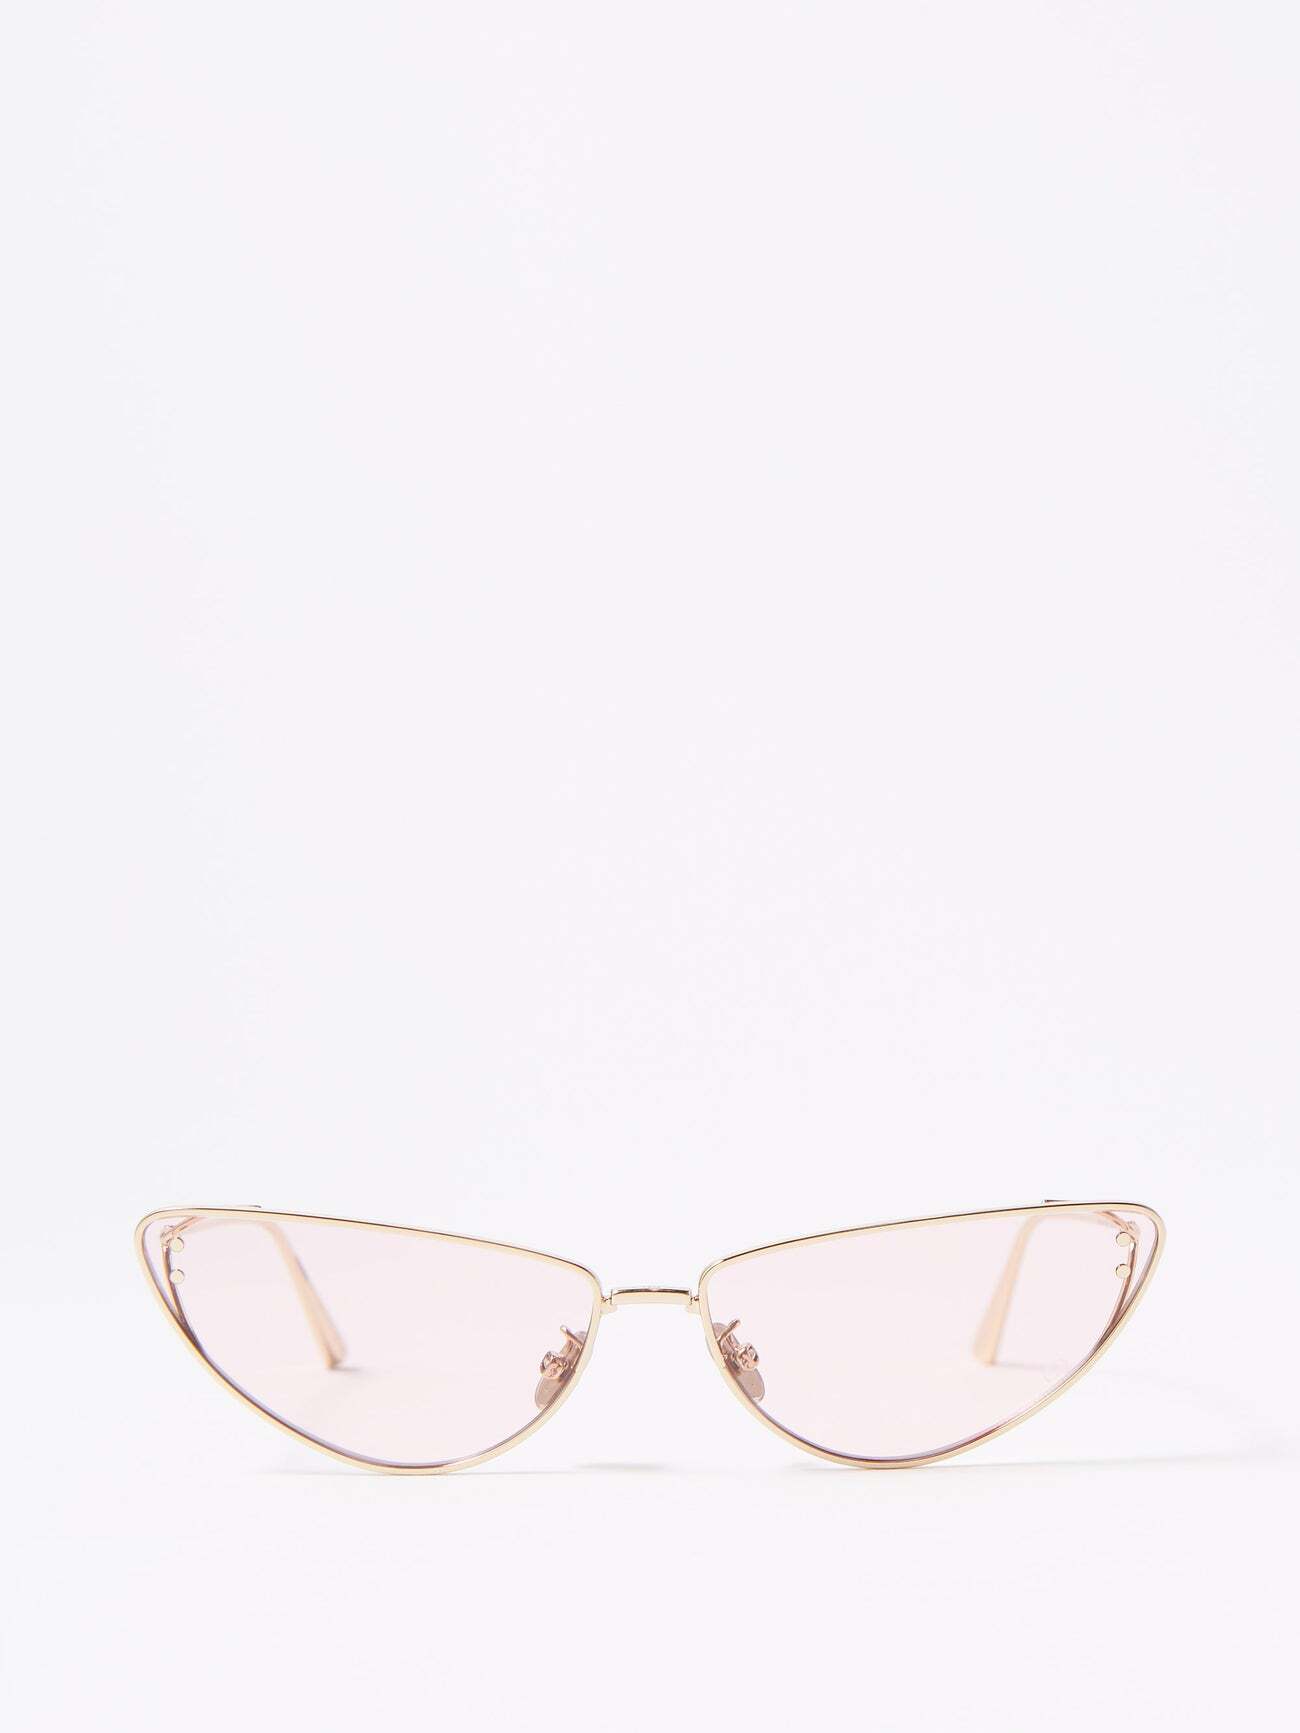 Dior - Missdior B1u Cat-eye Metal Sunglasses - Womens - Pink Gold